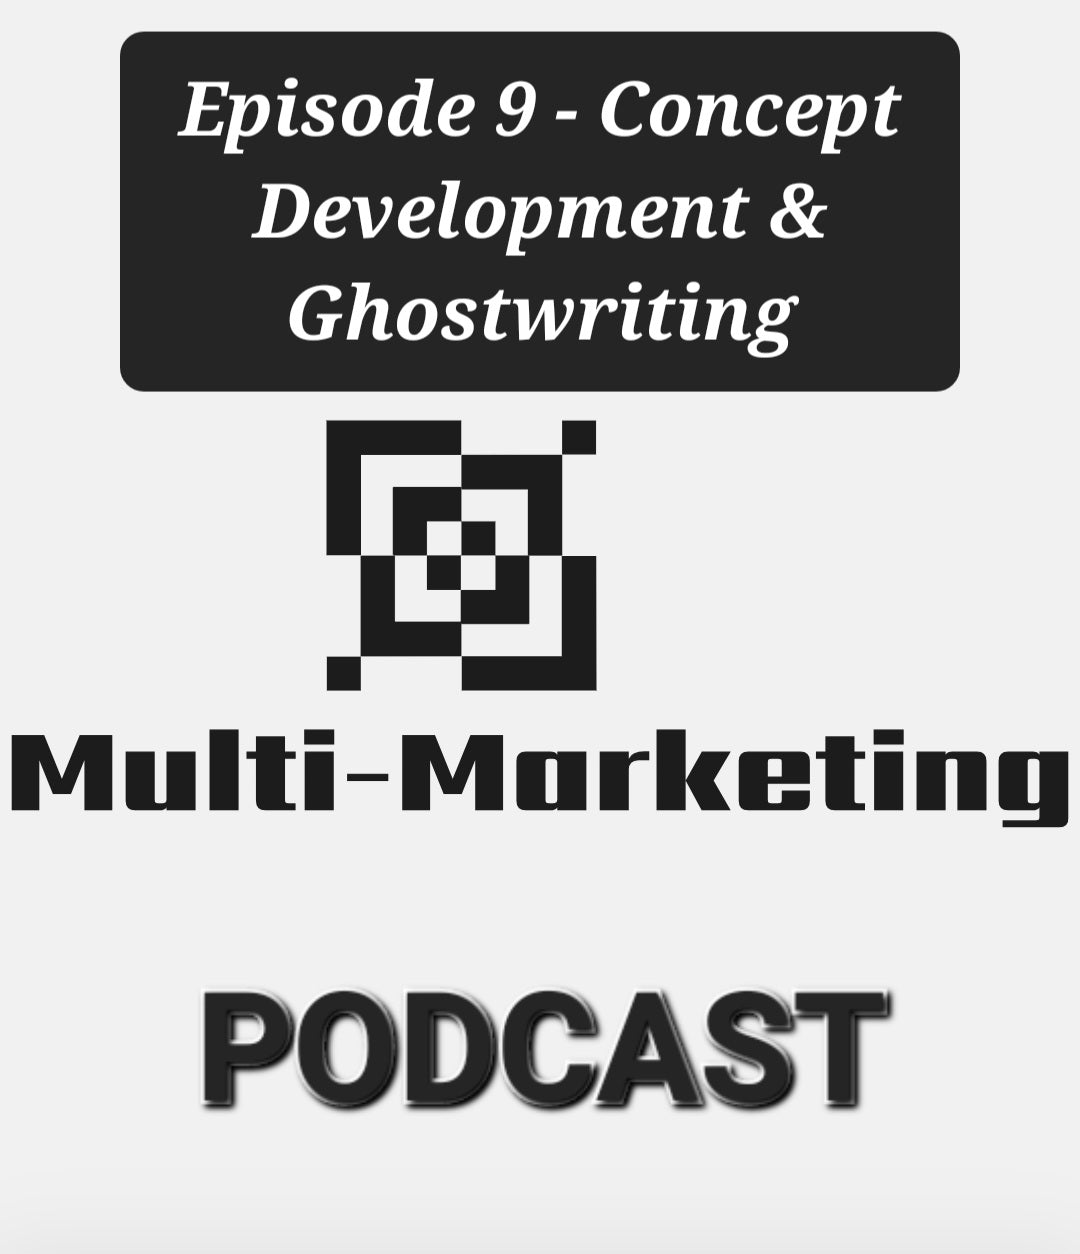 Multi-Marketing Podcast - Episode 9: Concept Development & Ghostwriting